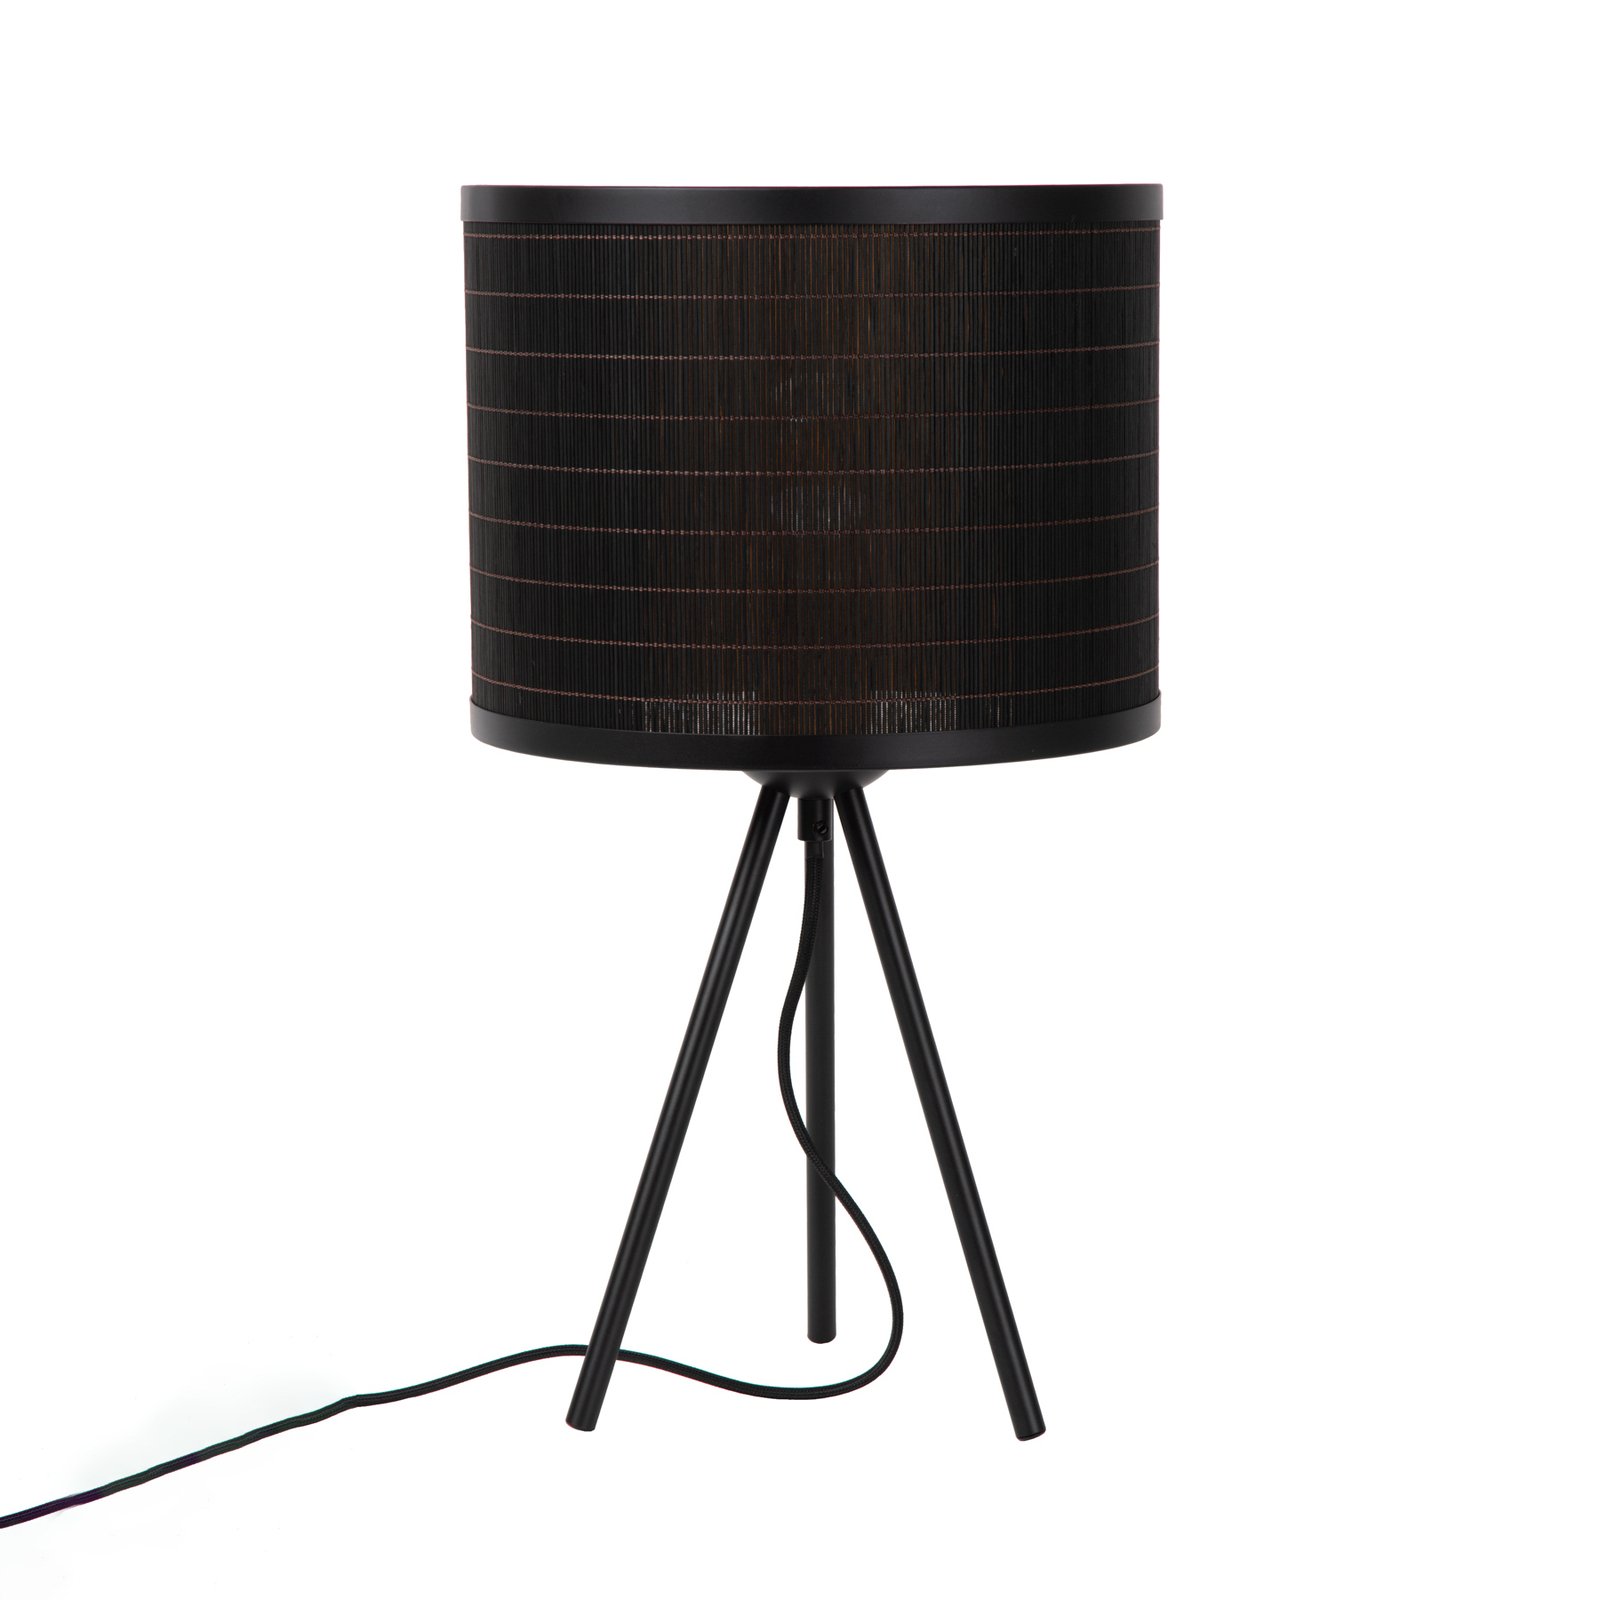 Tagalog table lamp made of bamboo, black, tripod